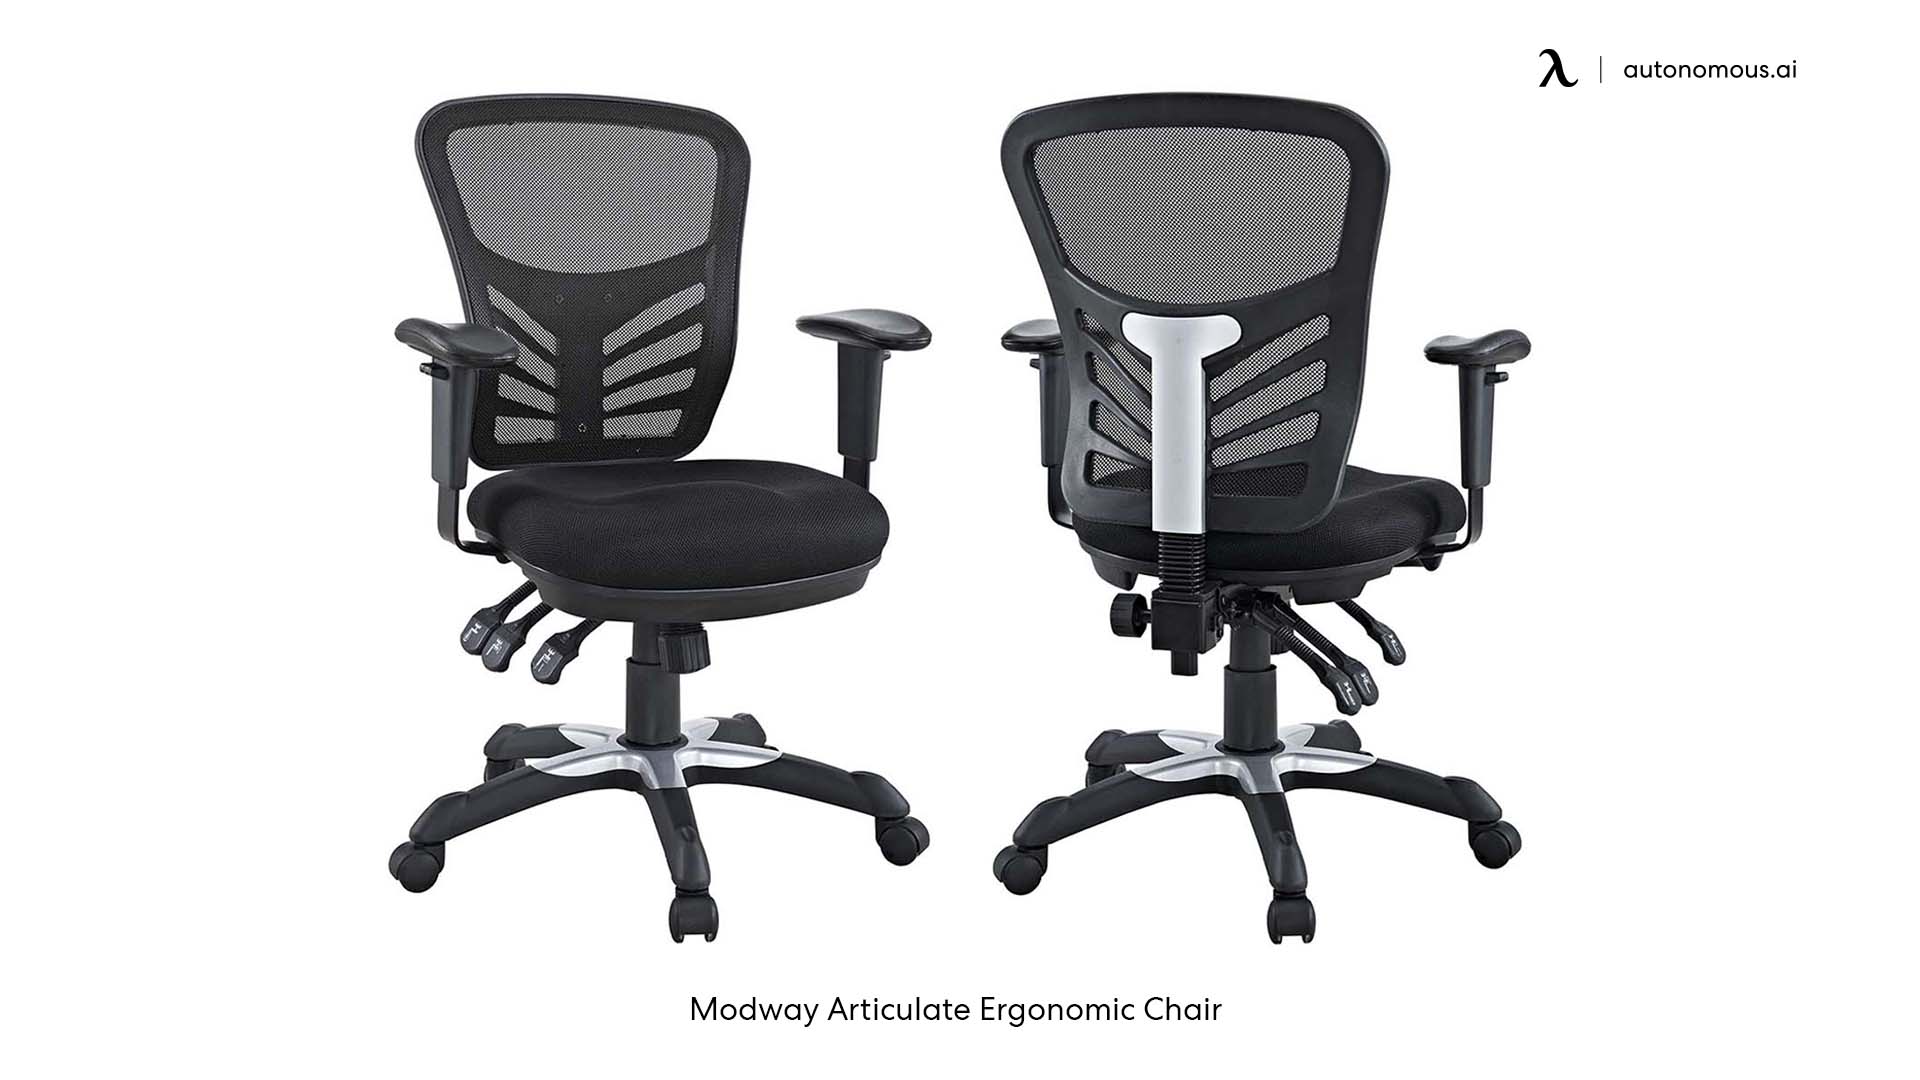 Modway Articulate comfortable desk chair